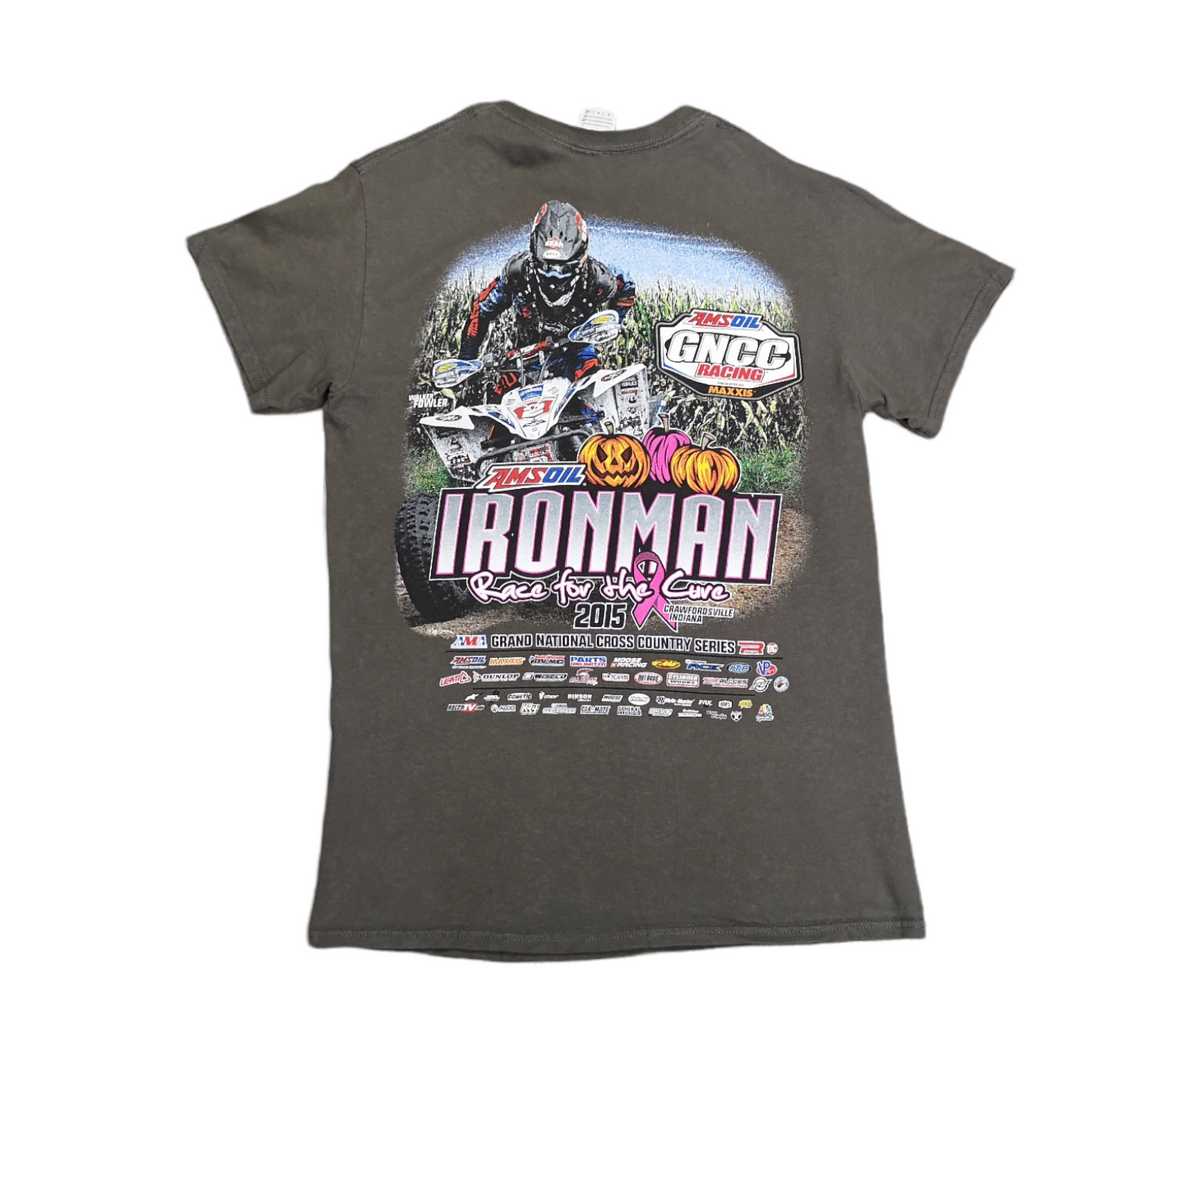 Gildan 2015 AMSOIL Ironman Racing T-Shirt - Size Small